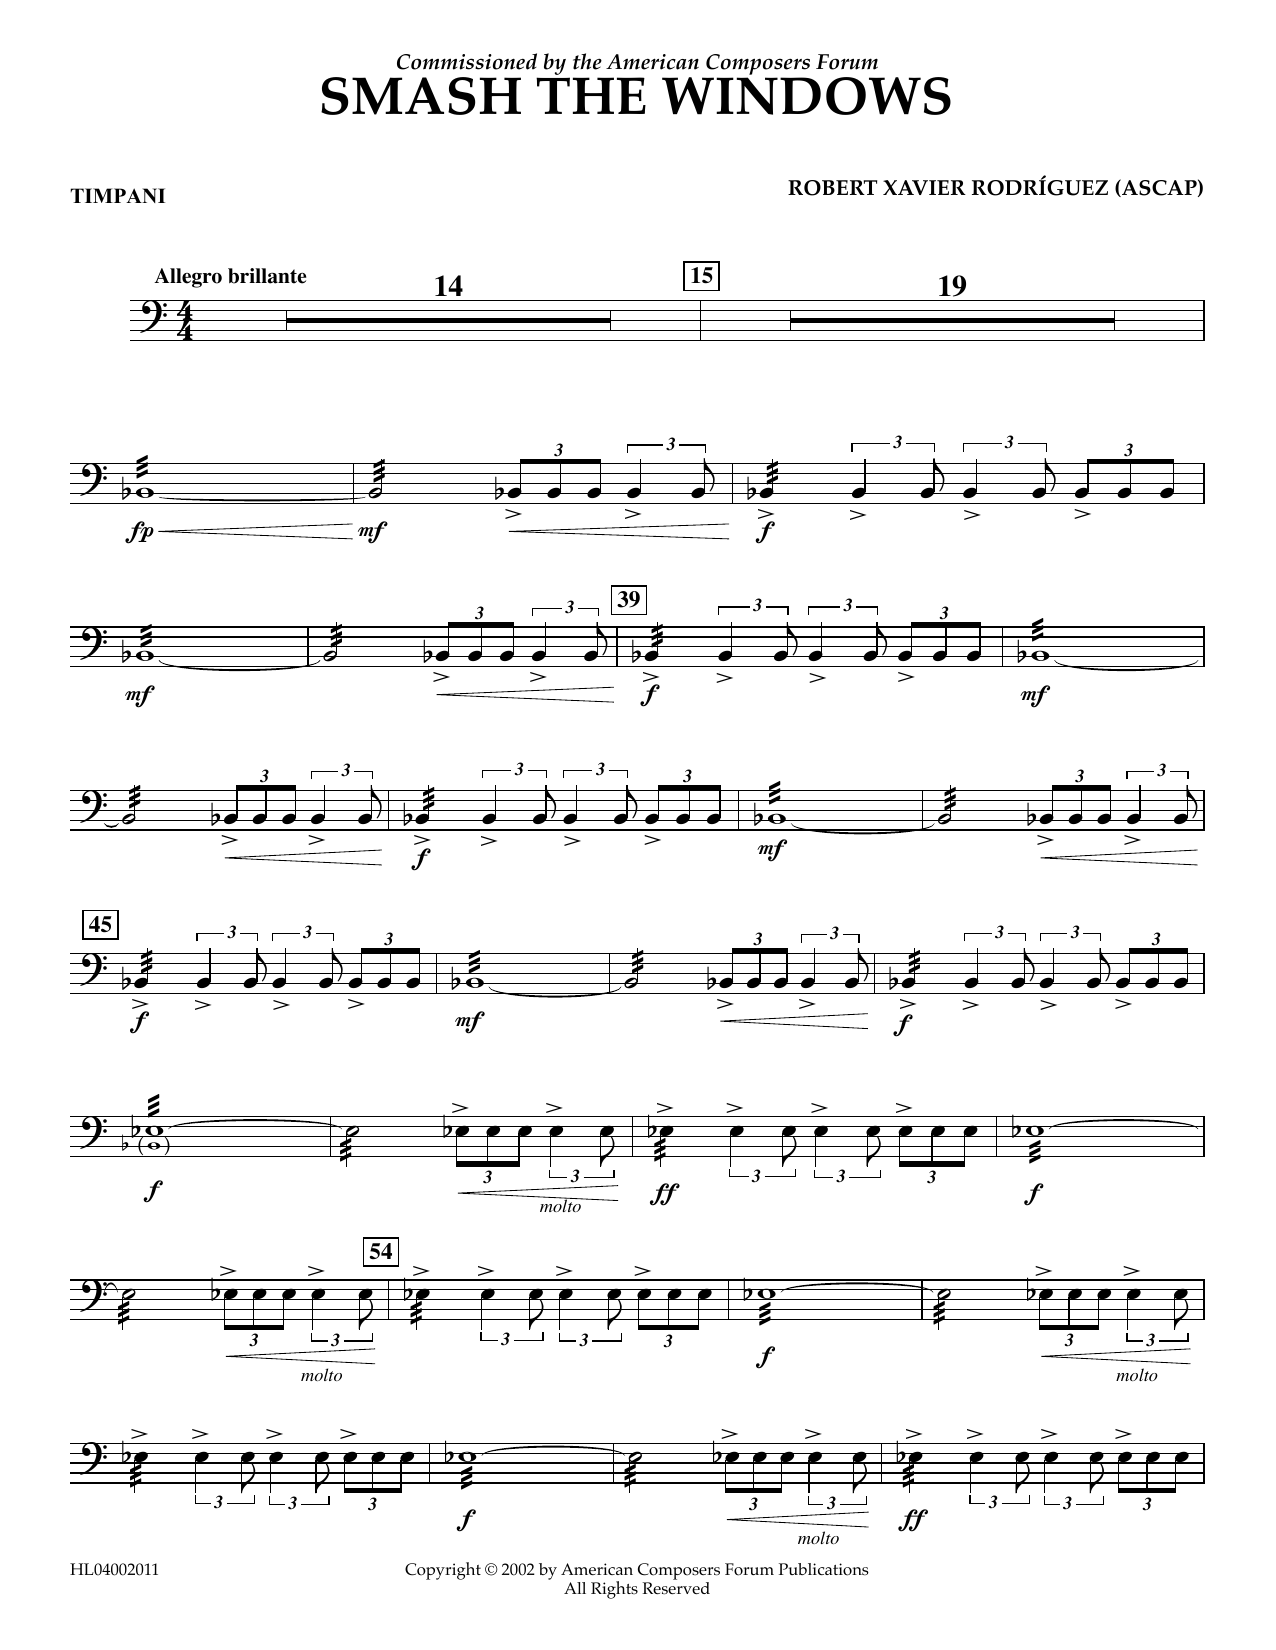 Robert Xavier Rodríguez Smash the Windows - Timpani Sheet Music Notes & Chords for Concert Band - Download or Print PDF